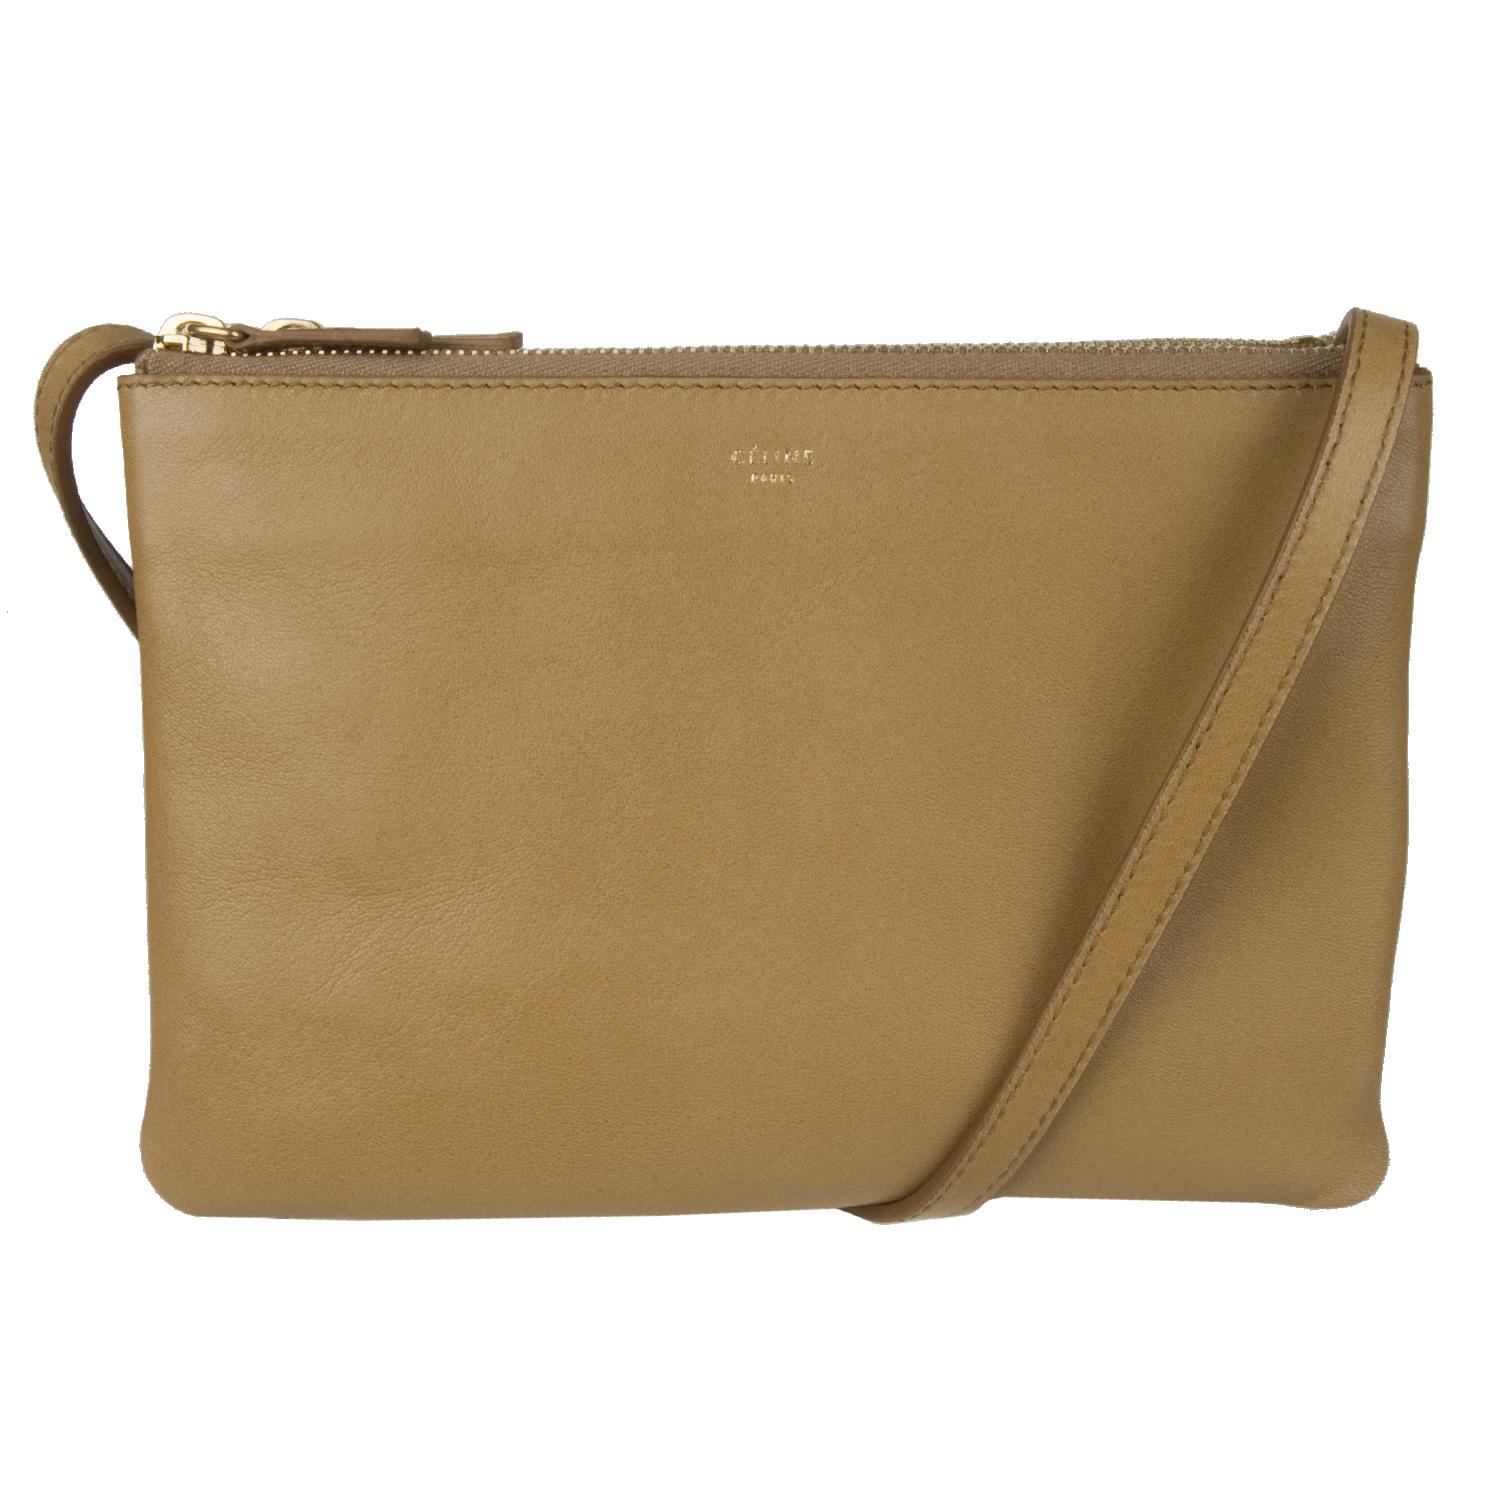 celine trio bag buy - celine camel leather handbag luggage